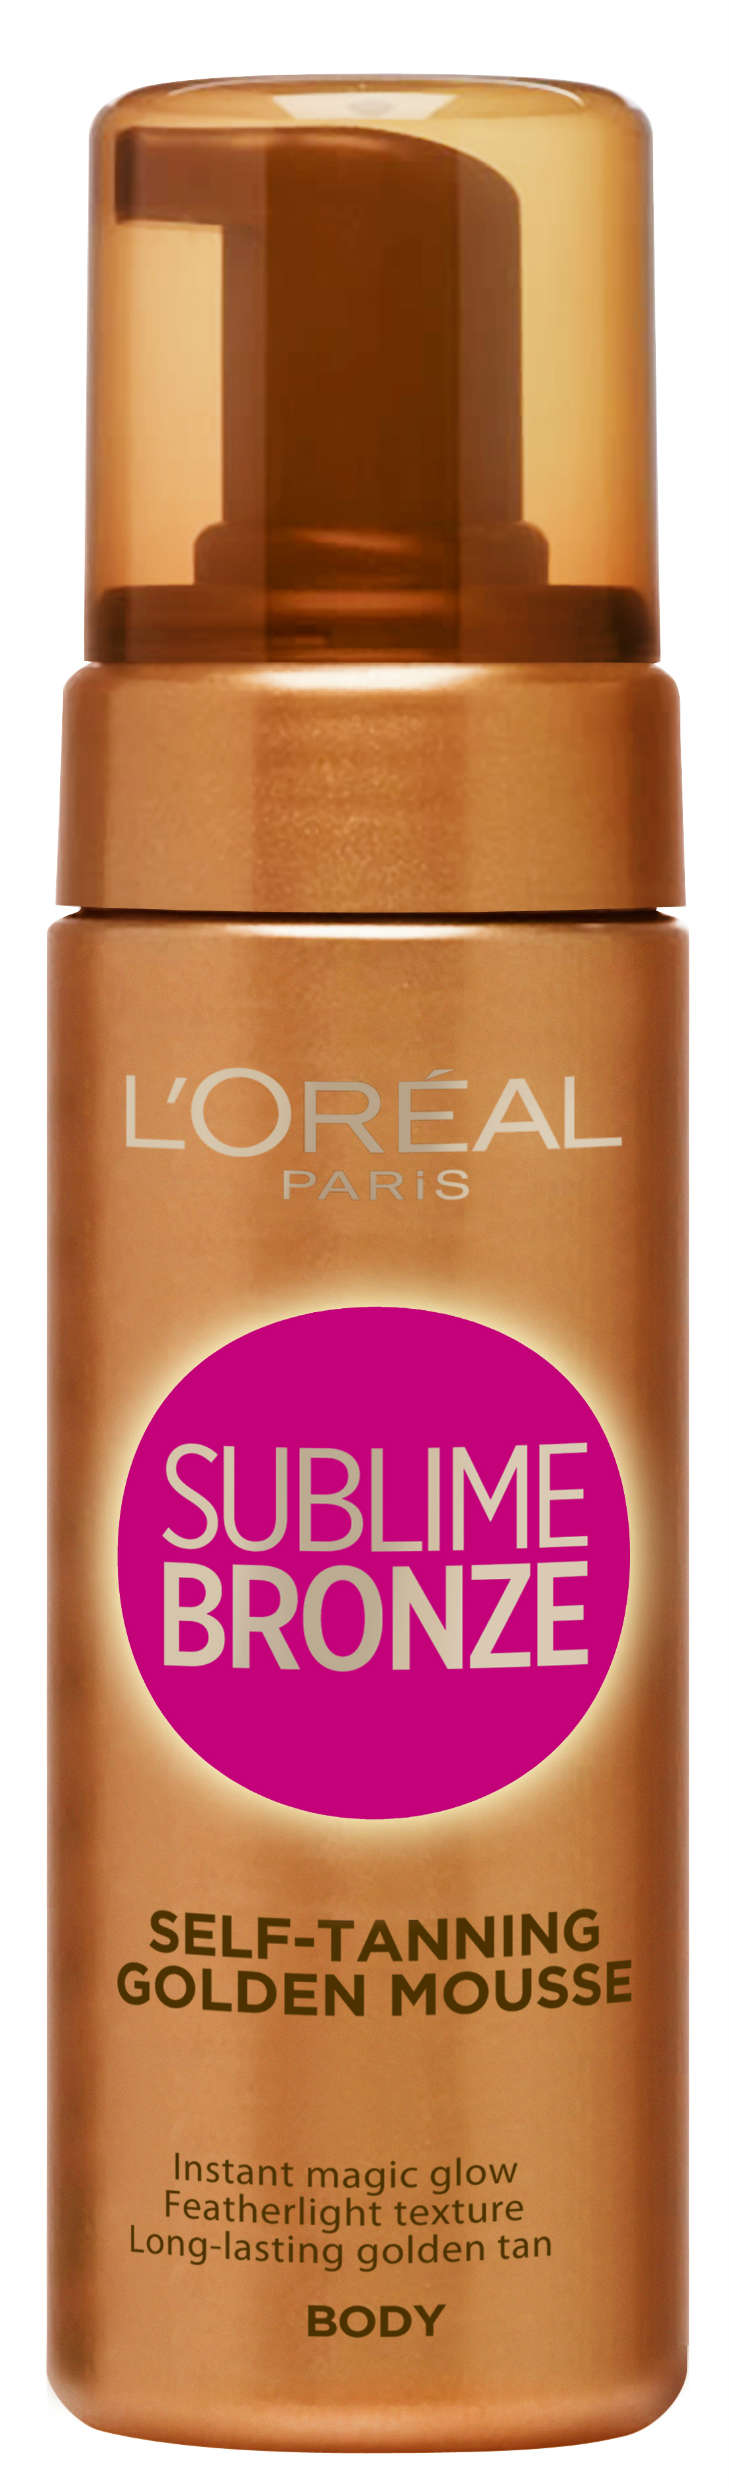 loreal sublime bronze